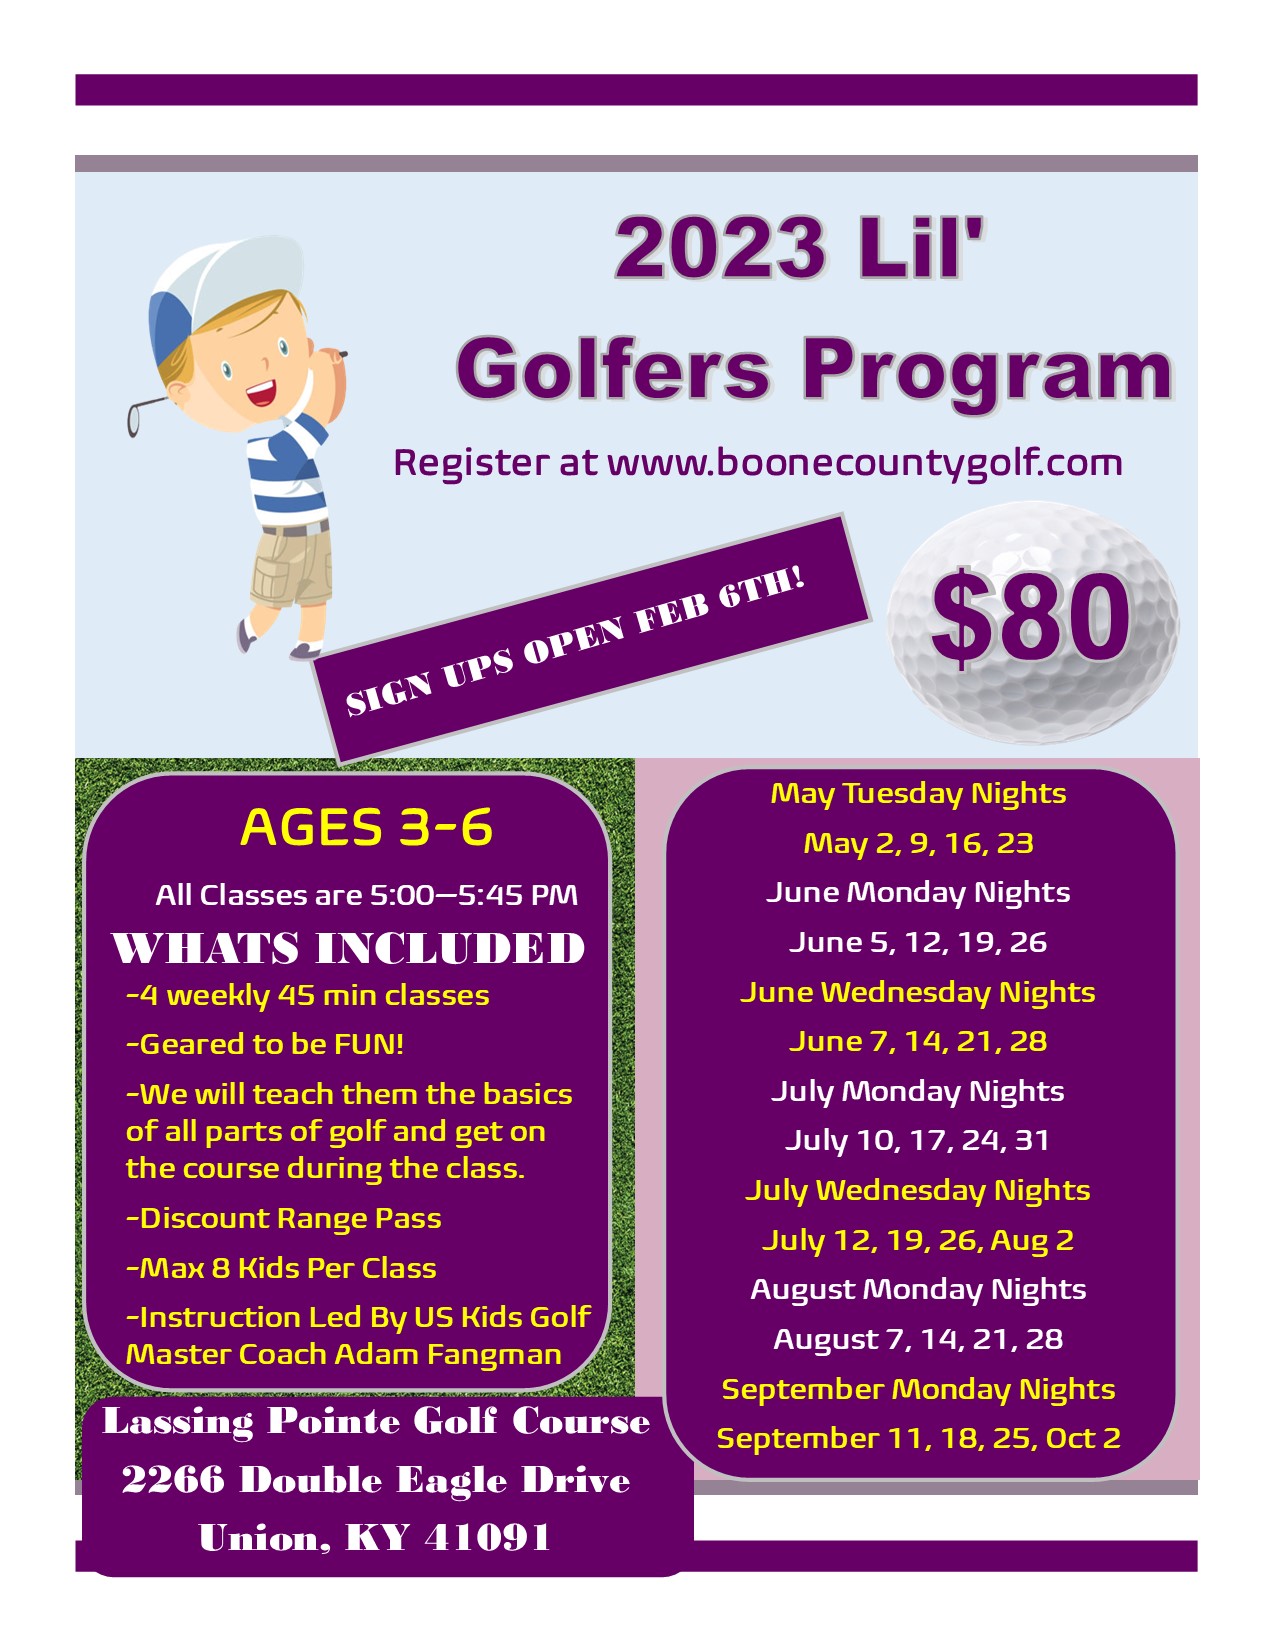 2023 Lil Golfers Program